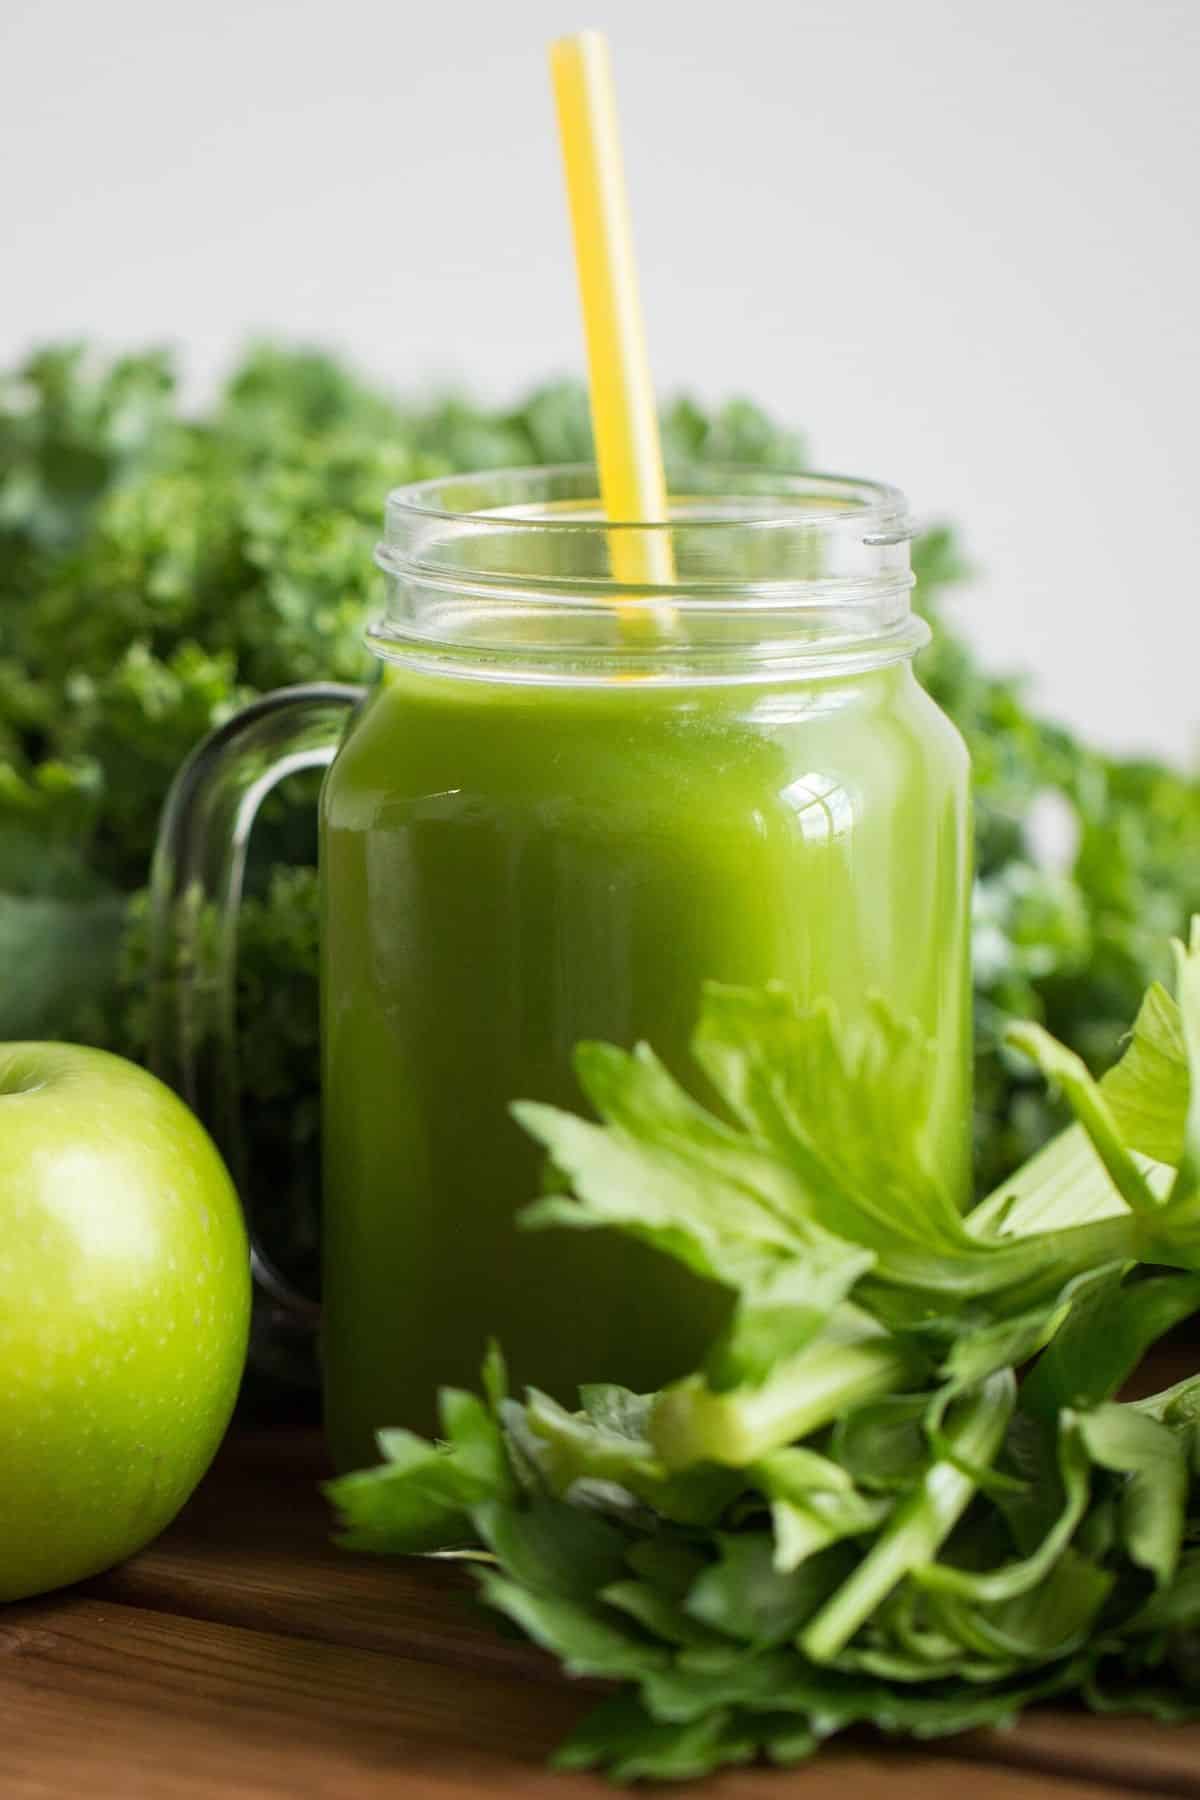 green juice in jar on table.